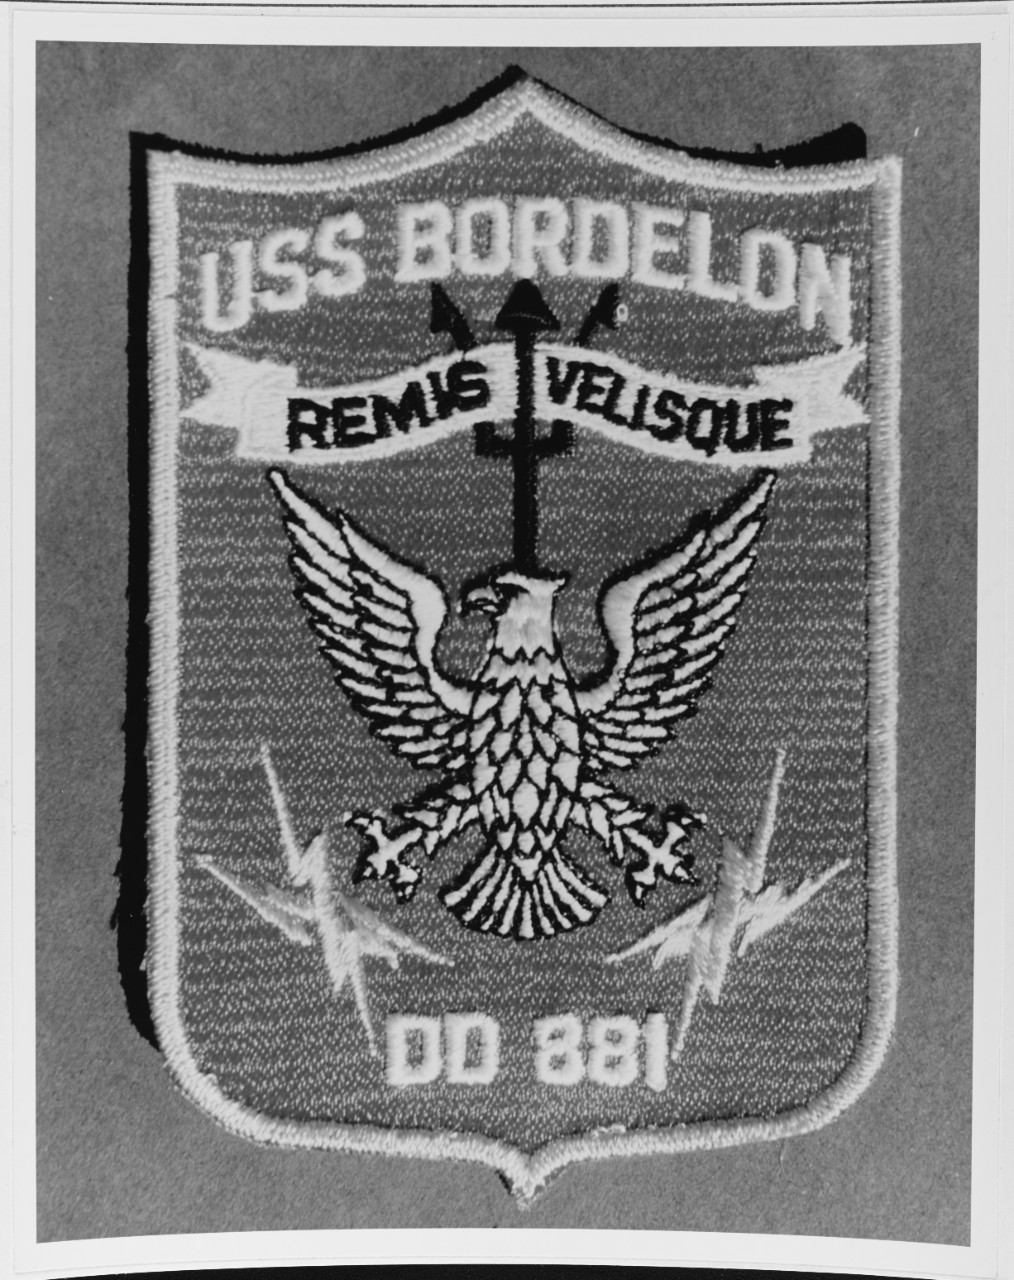 Insignia: USS BORDELON (DD - 881)